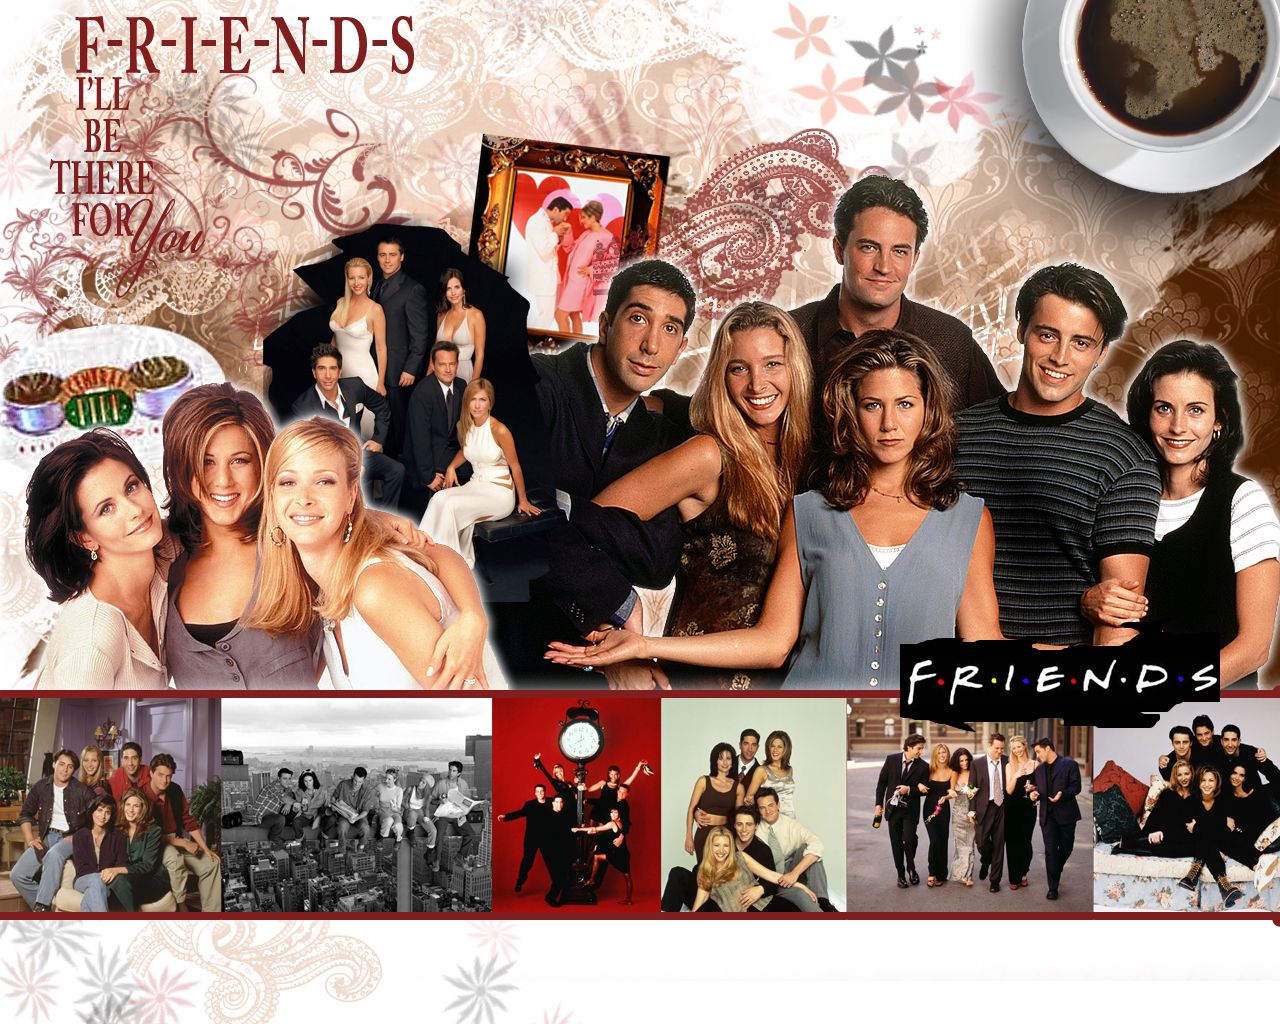 Friends TV Show Wallpaper - WallpaperSafari